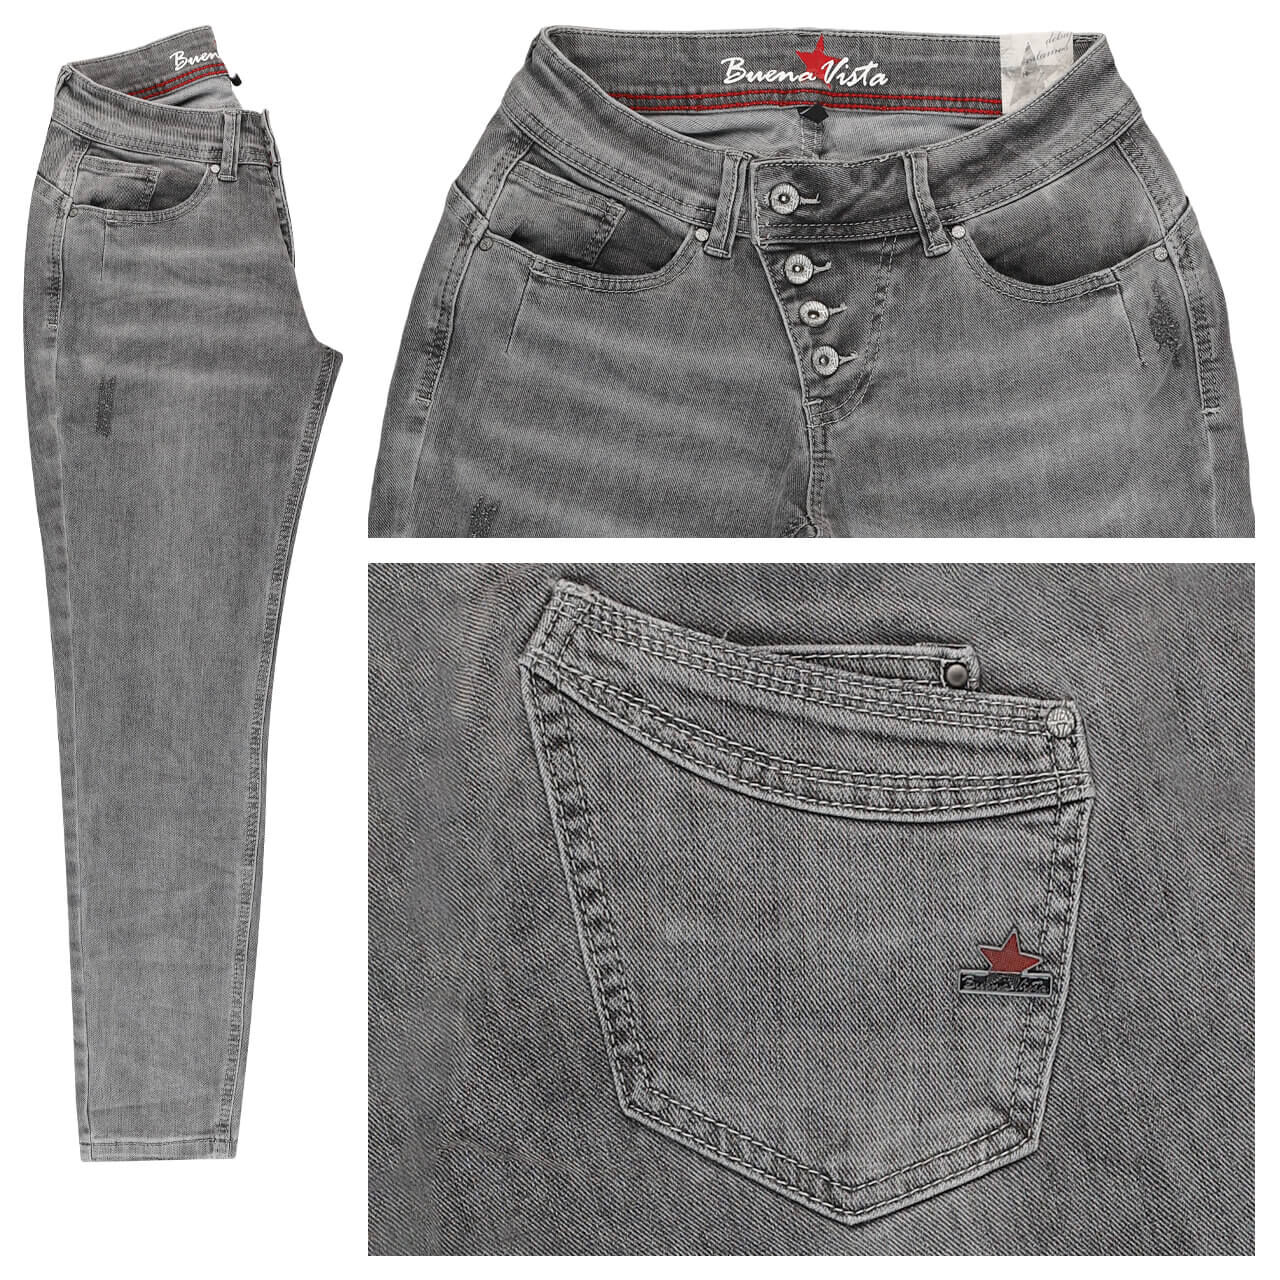 Buena Vista Malibu 7/8 Stretch Denim Jeans faded grey